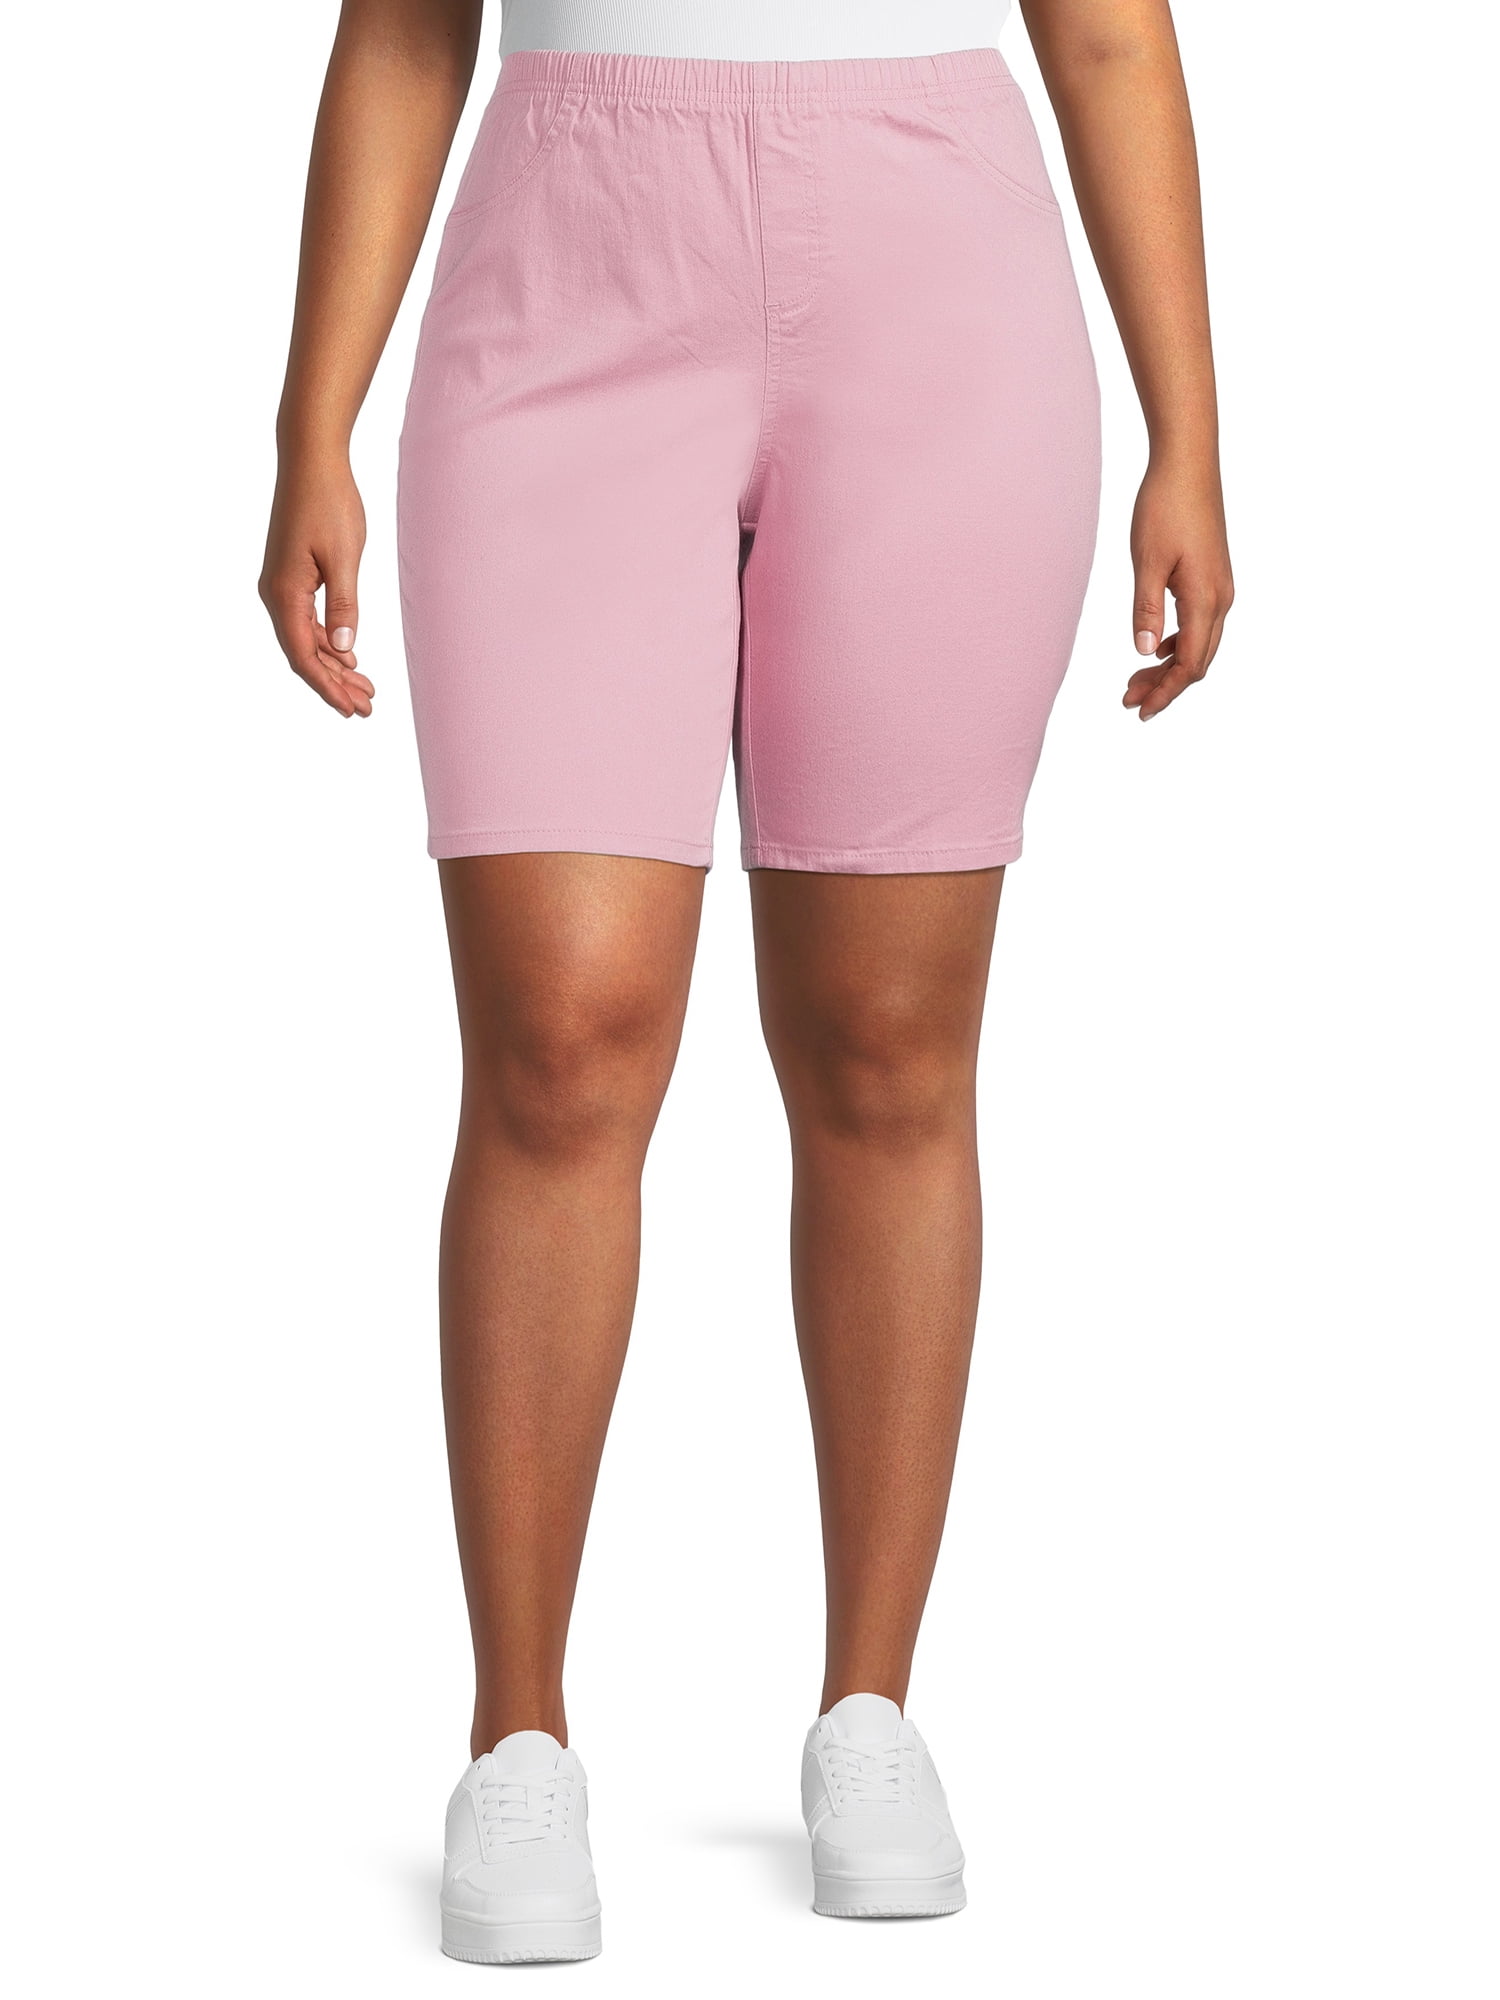 NEXT New Blue Pink Linen Blend Stonewashed Shorts Plus Size 8-22 